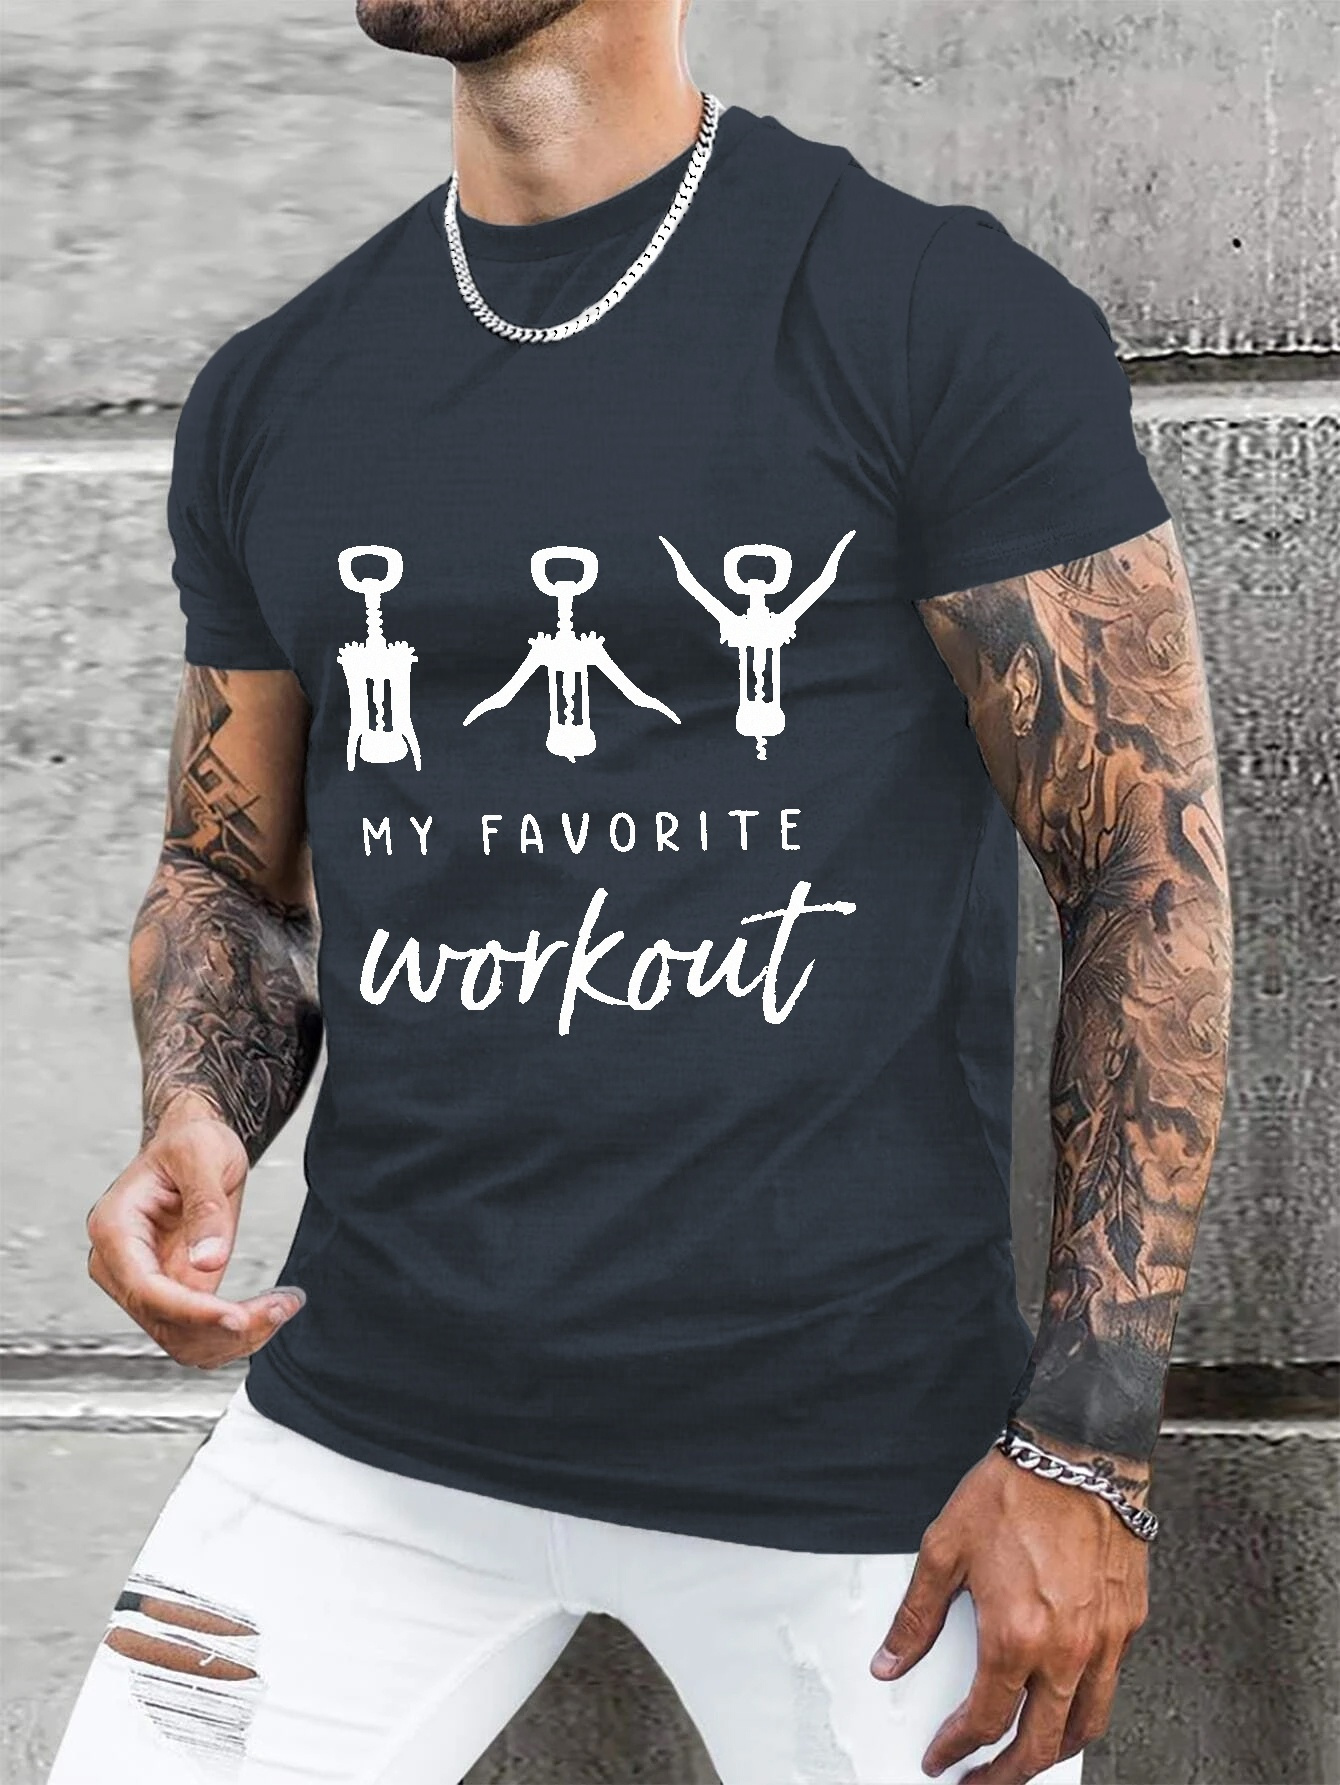 Street Workout Shirt  Men's Workout Clothing